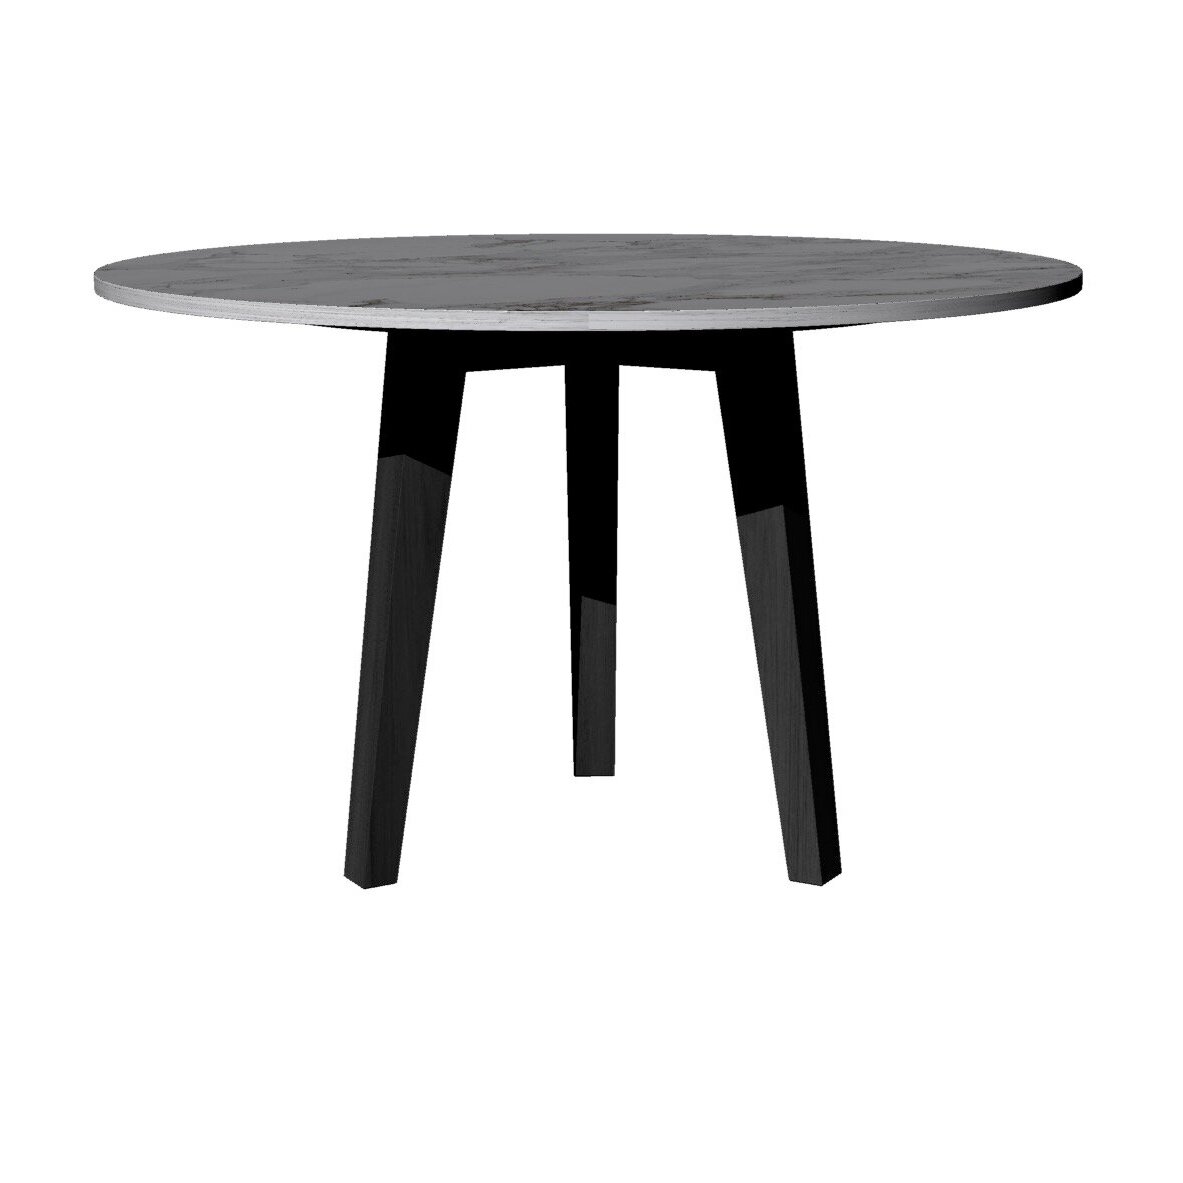 Table+13.3+%28120%29FINAL+marbre+noir+FACE.jpg